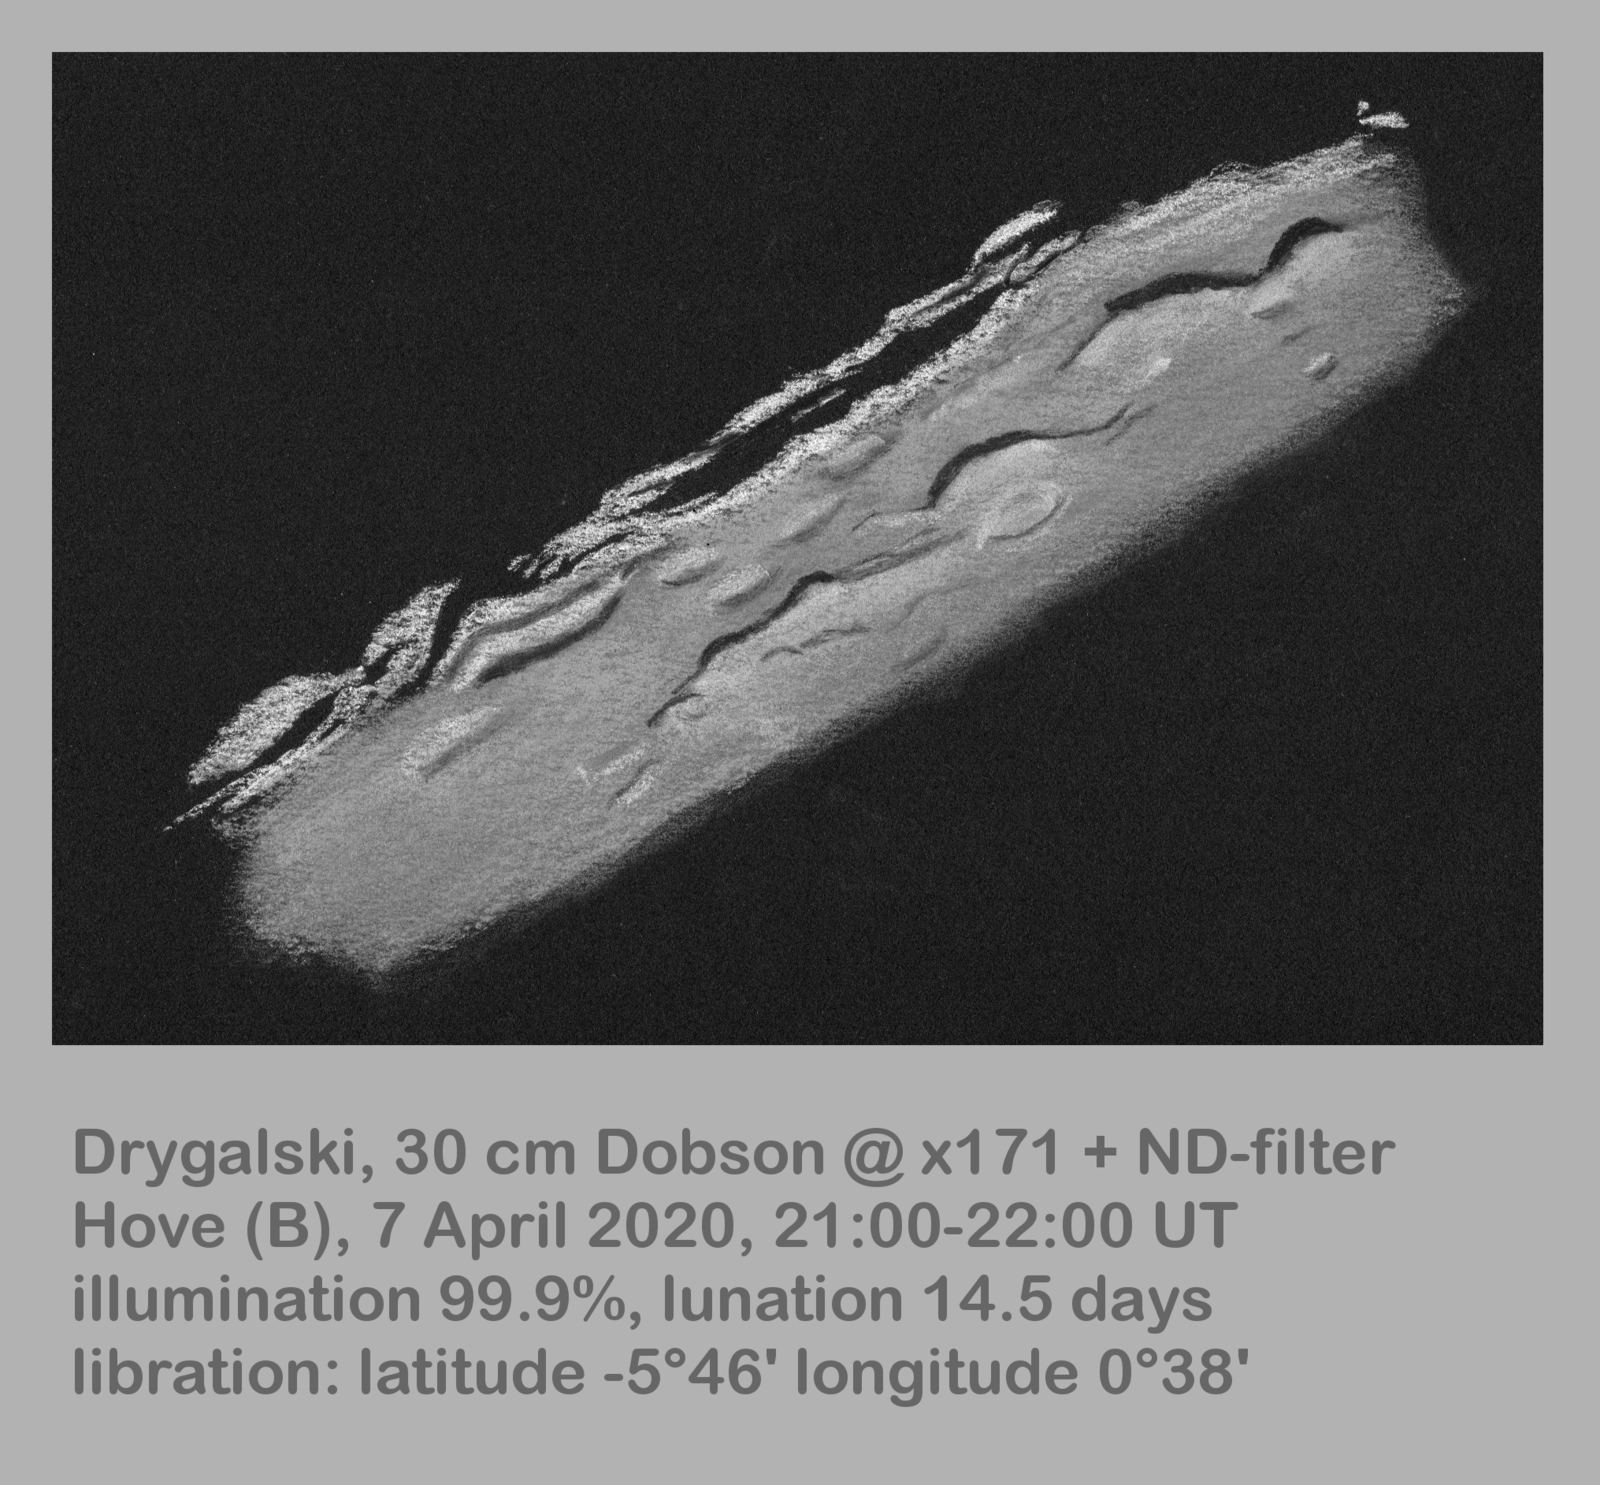 Lunar 094: Drygalski (large South Pole-region crater)